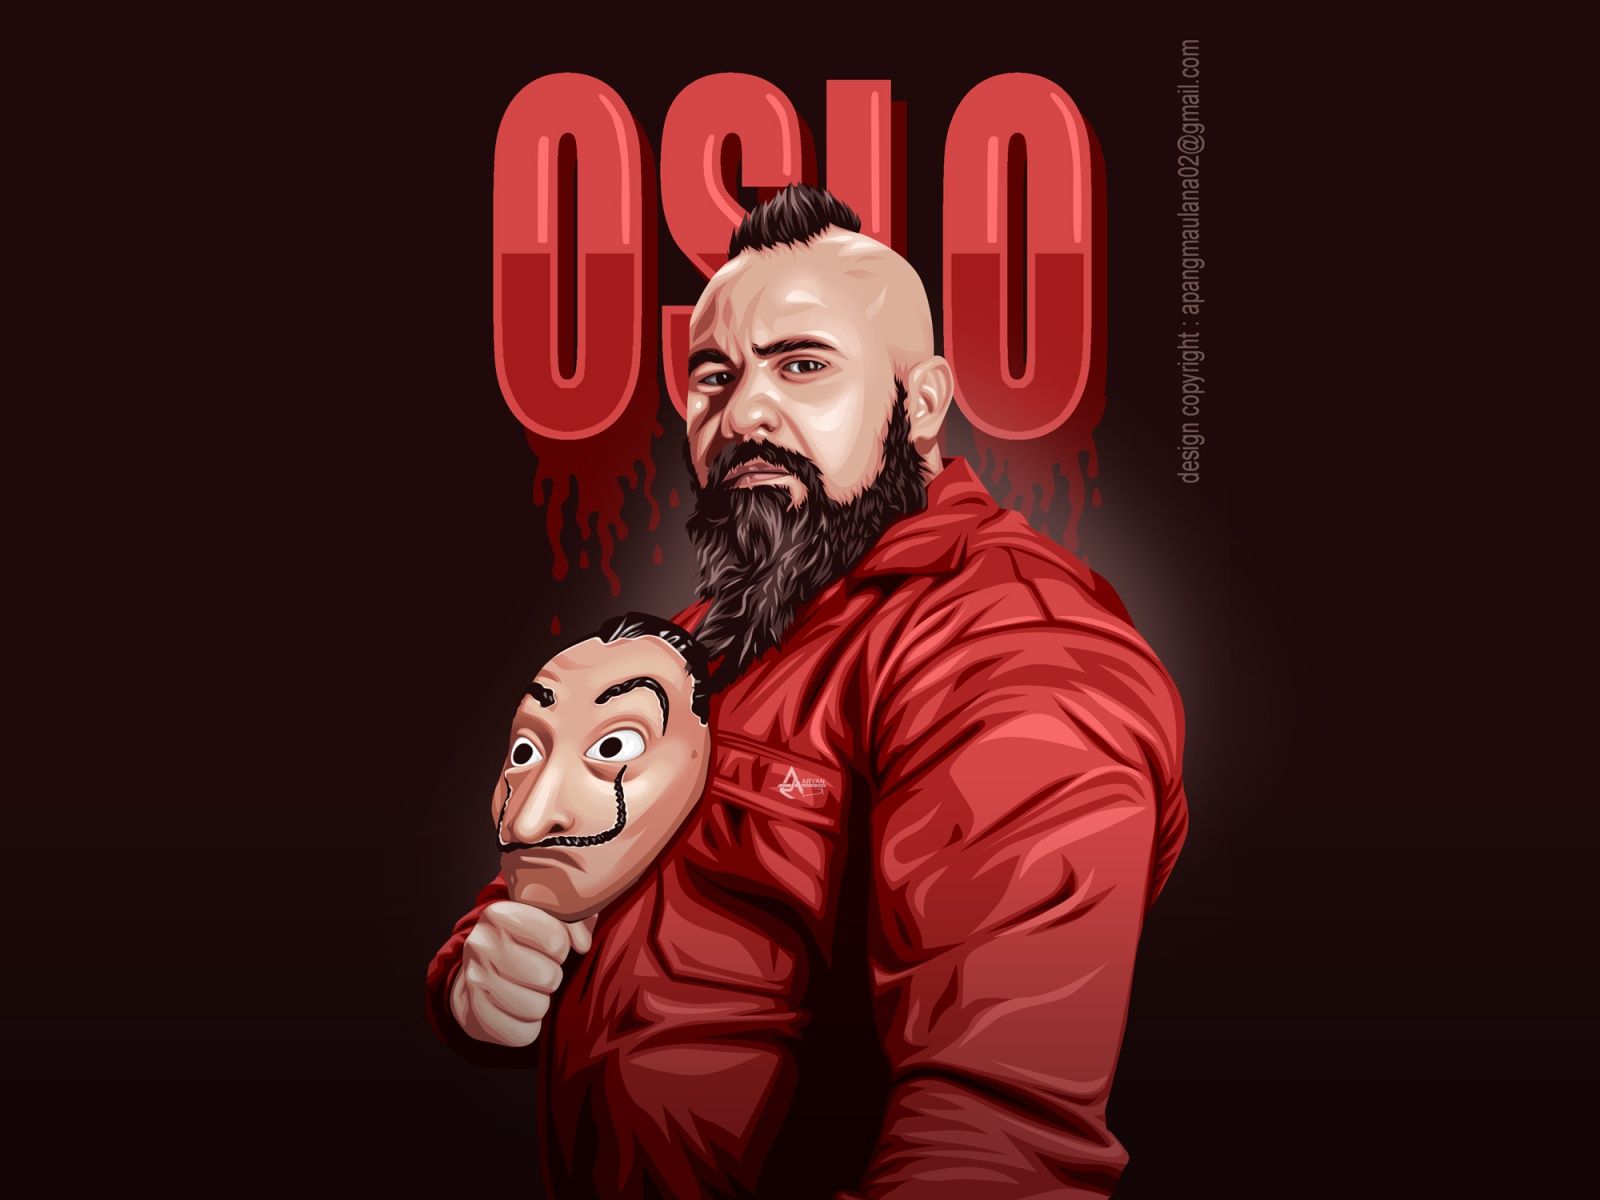 Oslo (money heist)